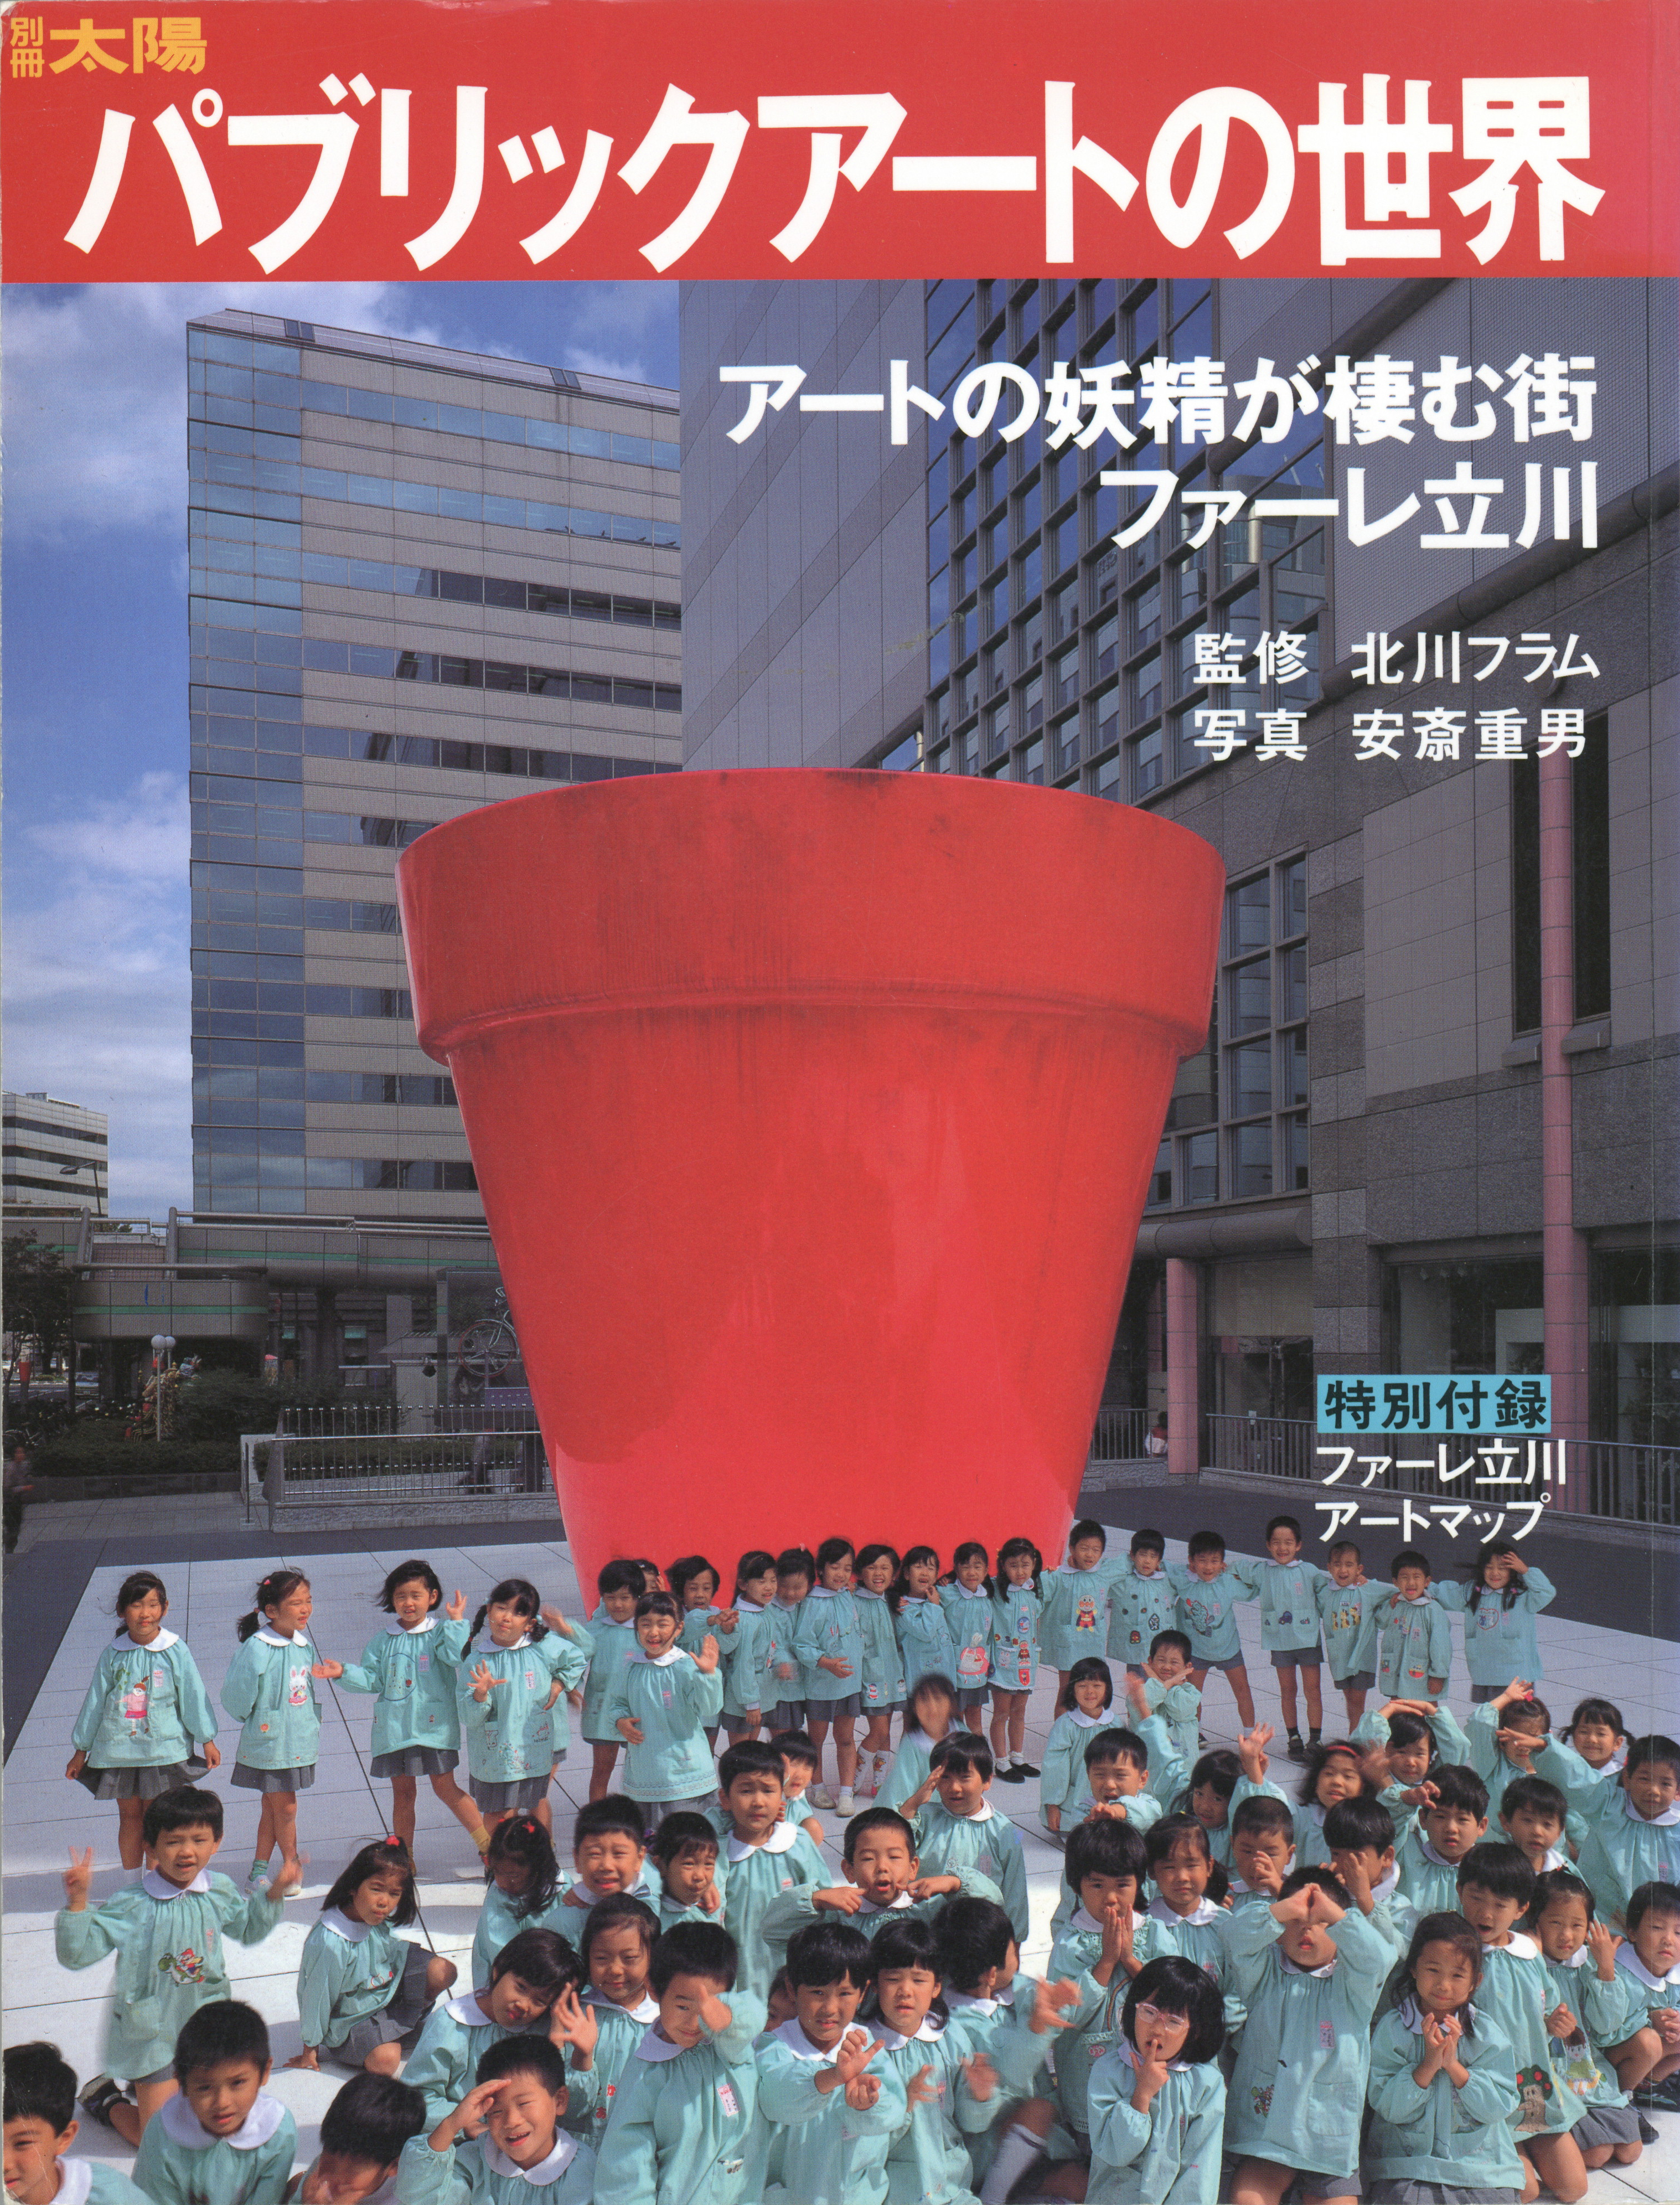 The cover of Paburikku āto no sekai [The World of Public Art] (Tokyo: Heibonsha, 1995).